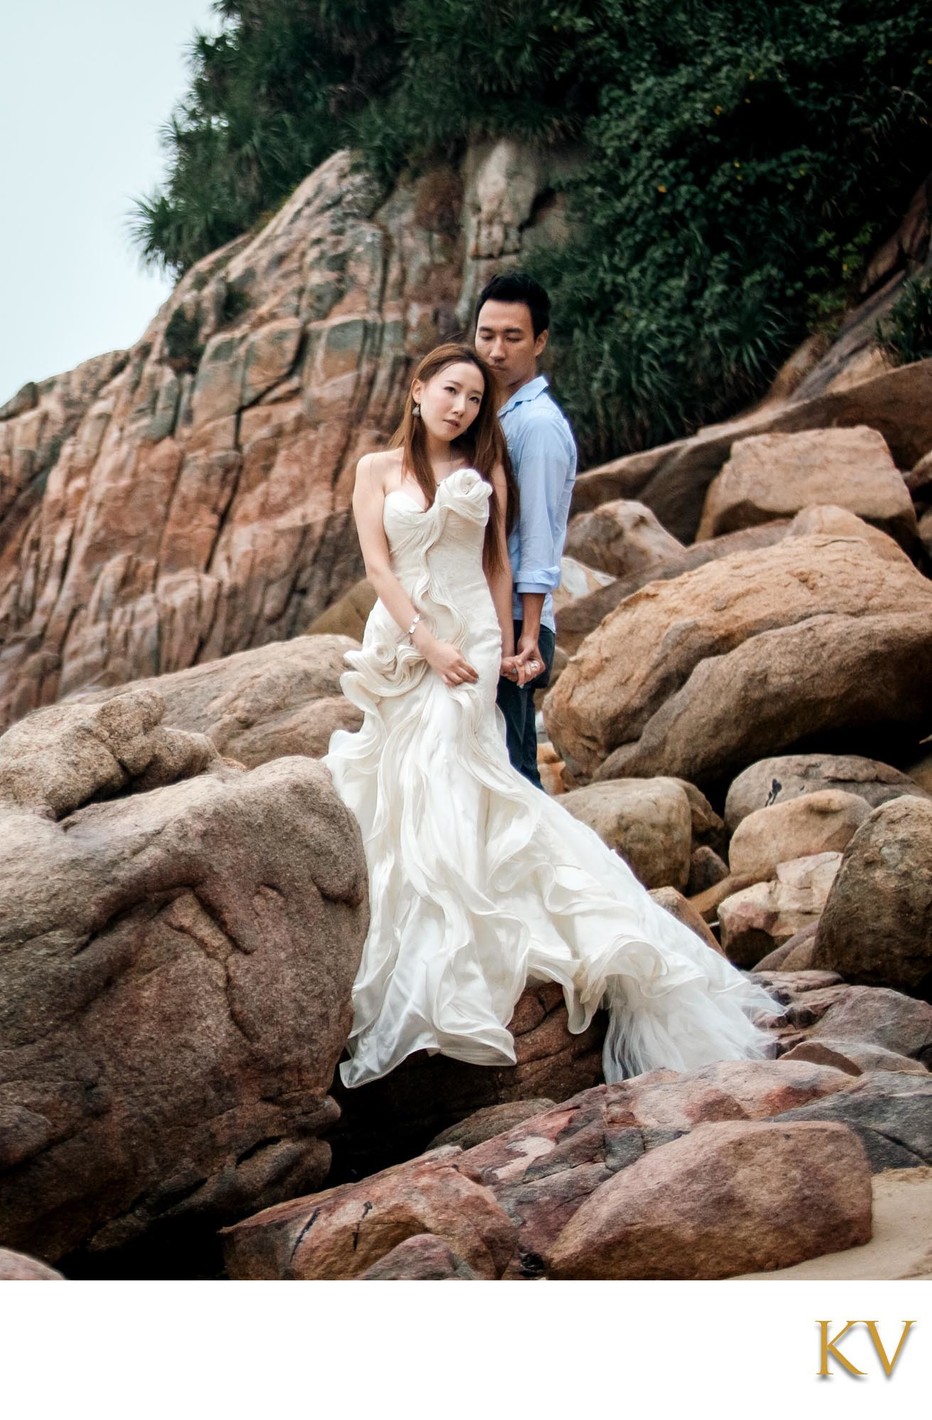 Shek O Beach Hong Kong stylish bride & groom